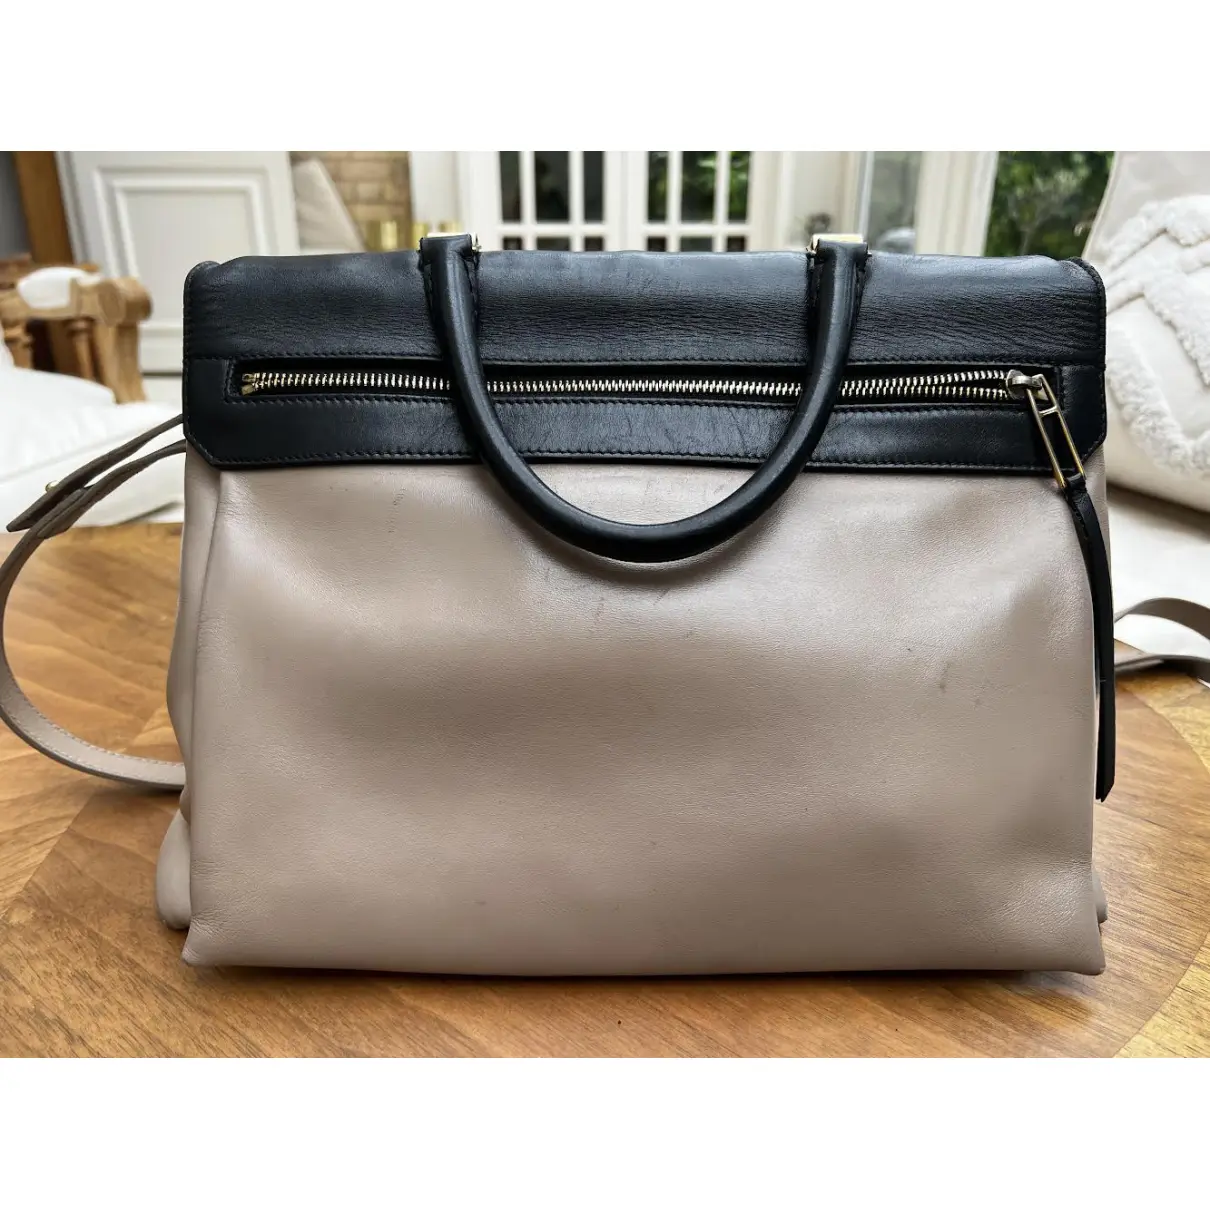 Leather handbag Lanvin